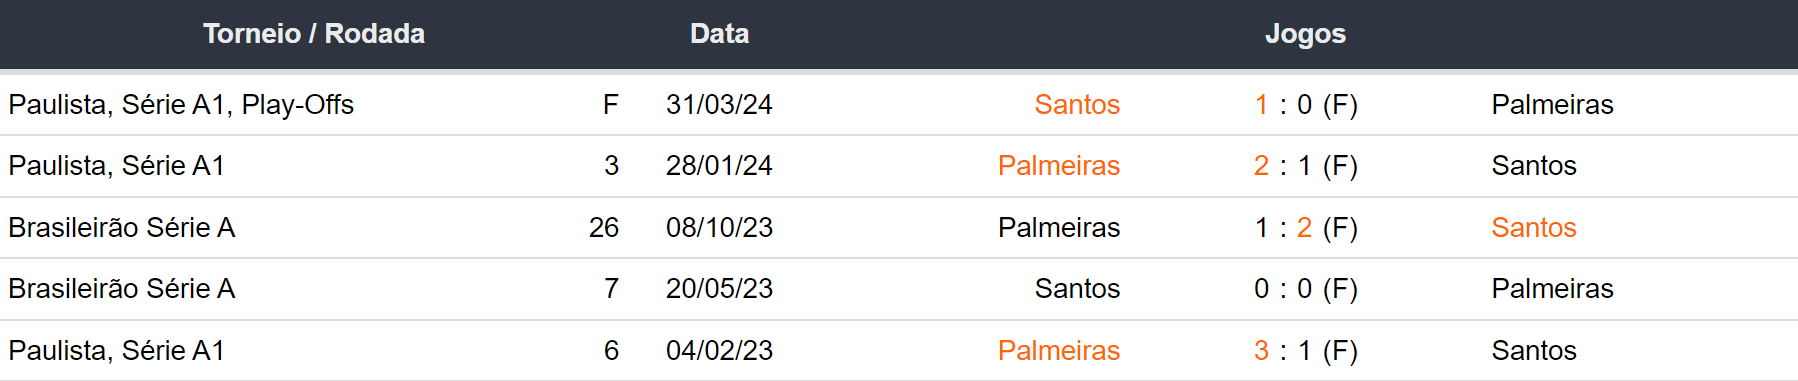 Ultimos 5 encontros Palmeiras x Santos 070424